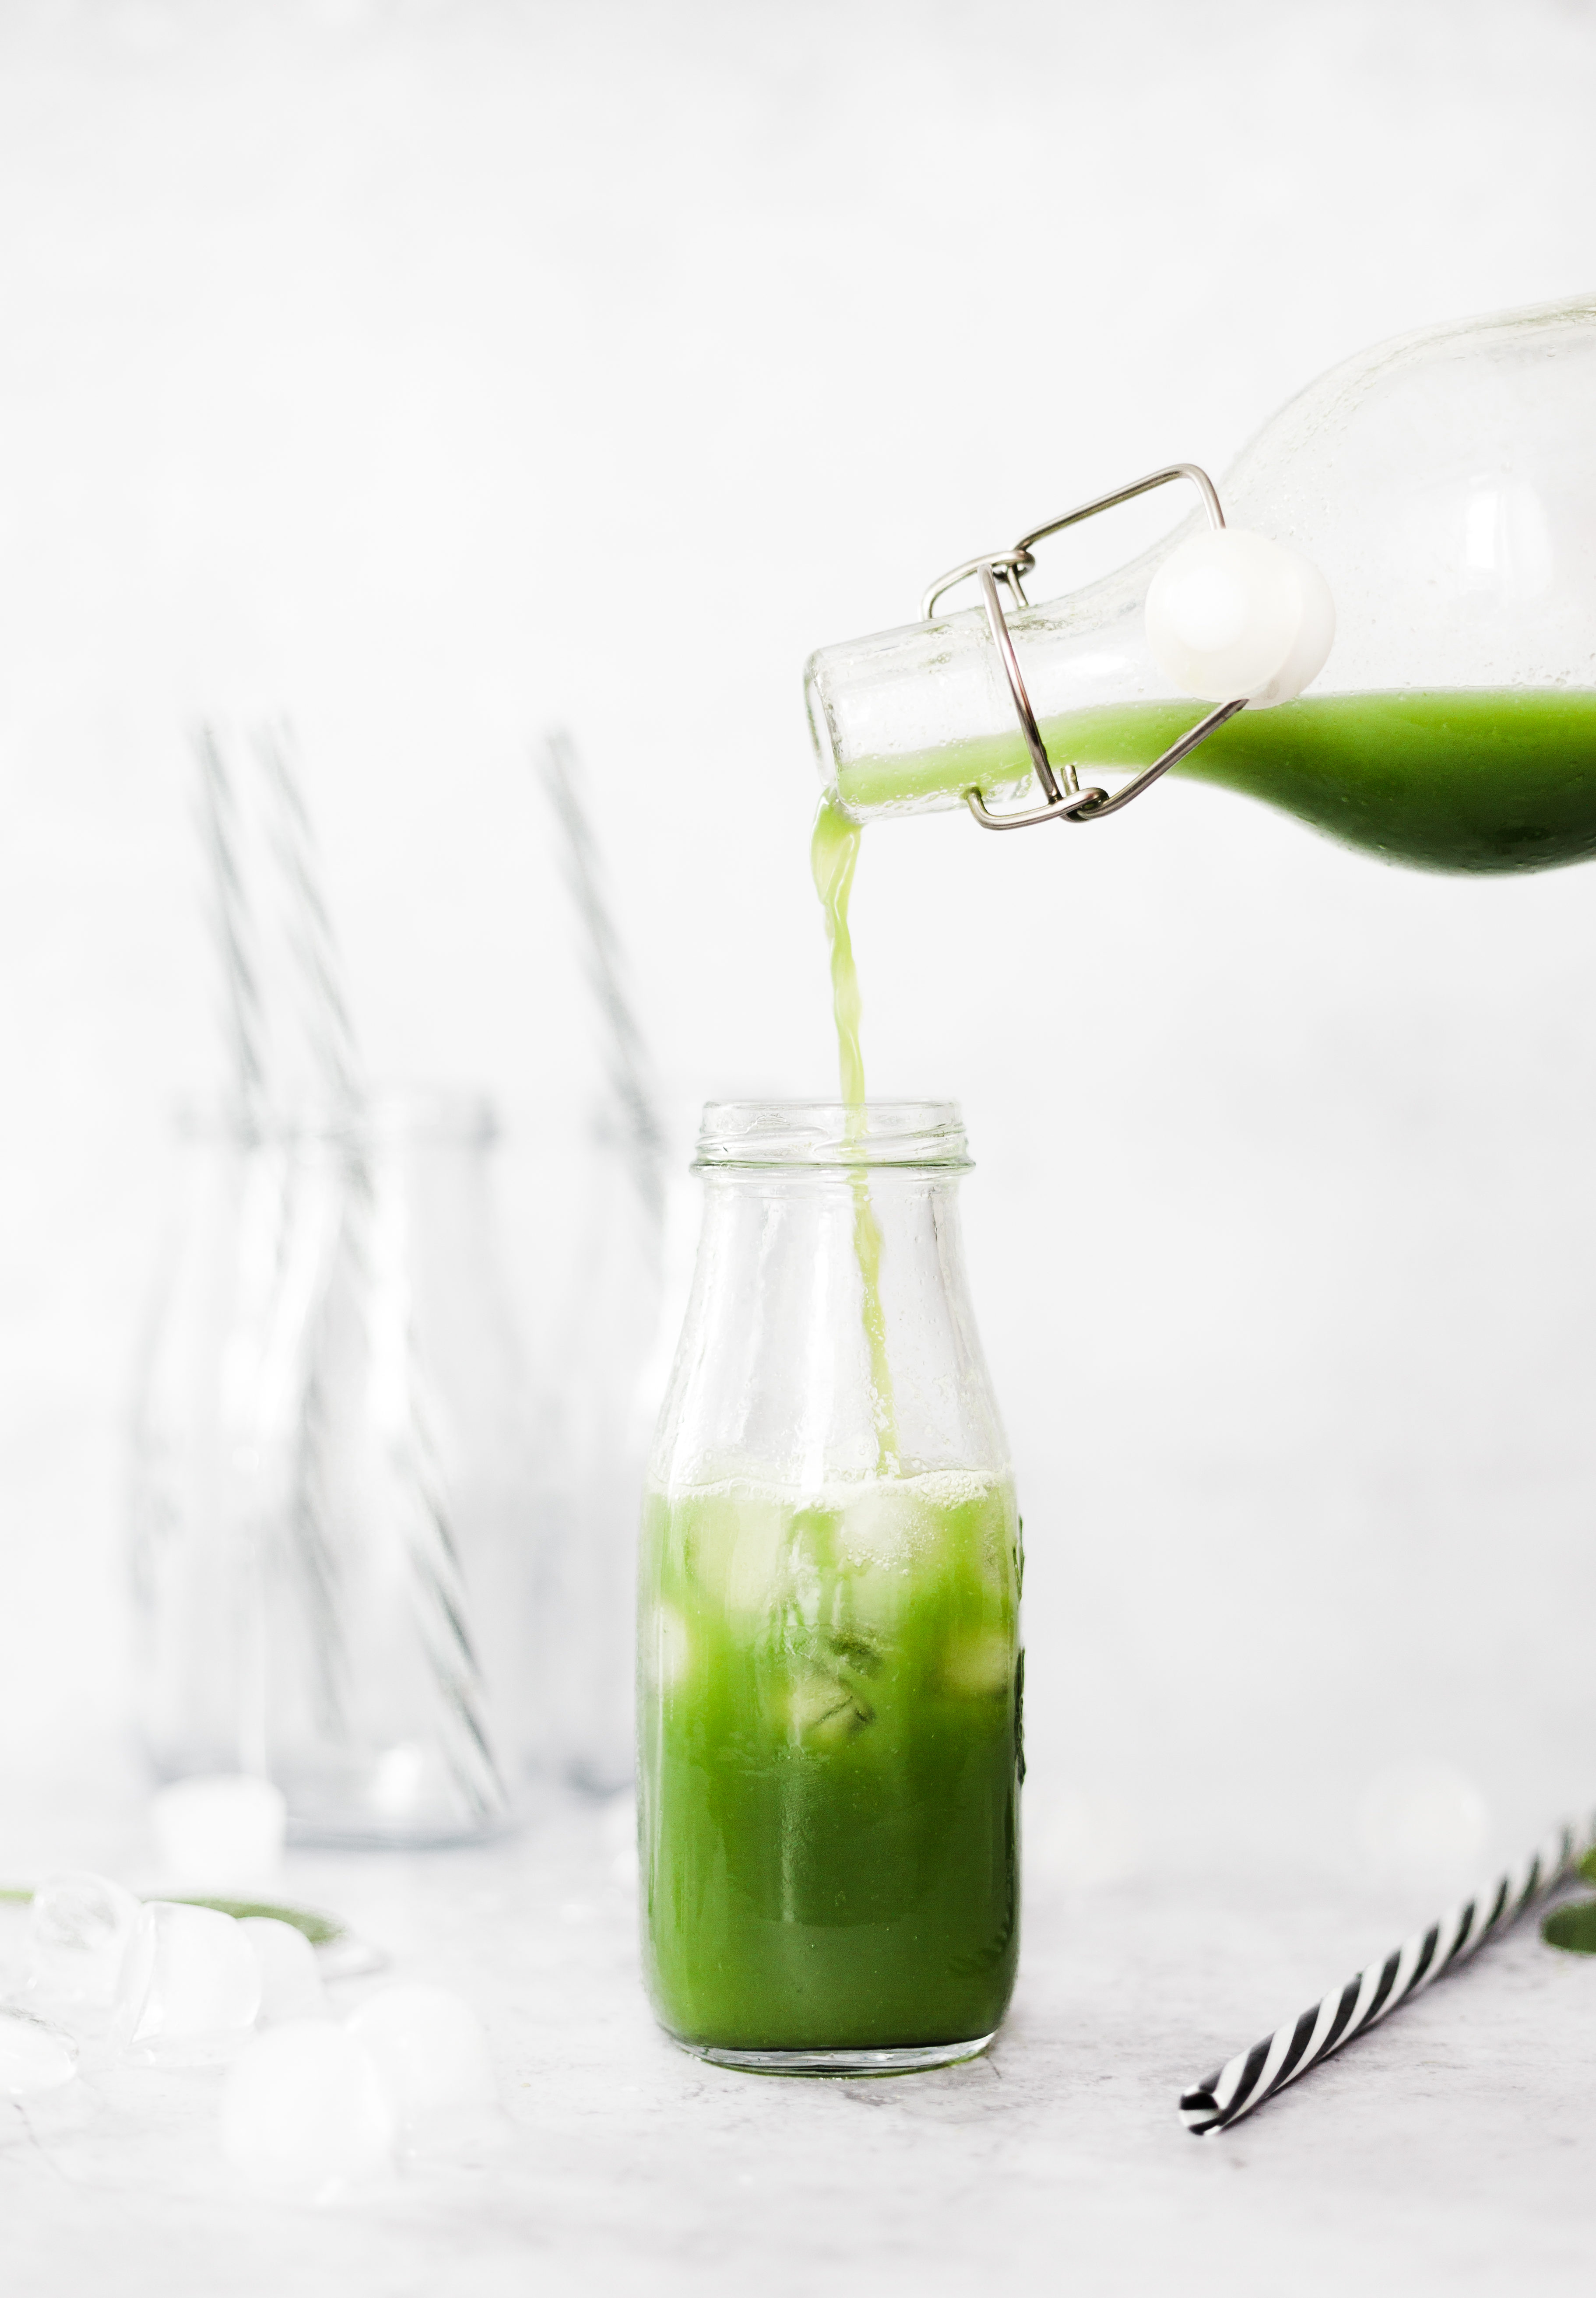 Popeye green juice